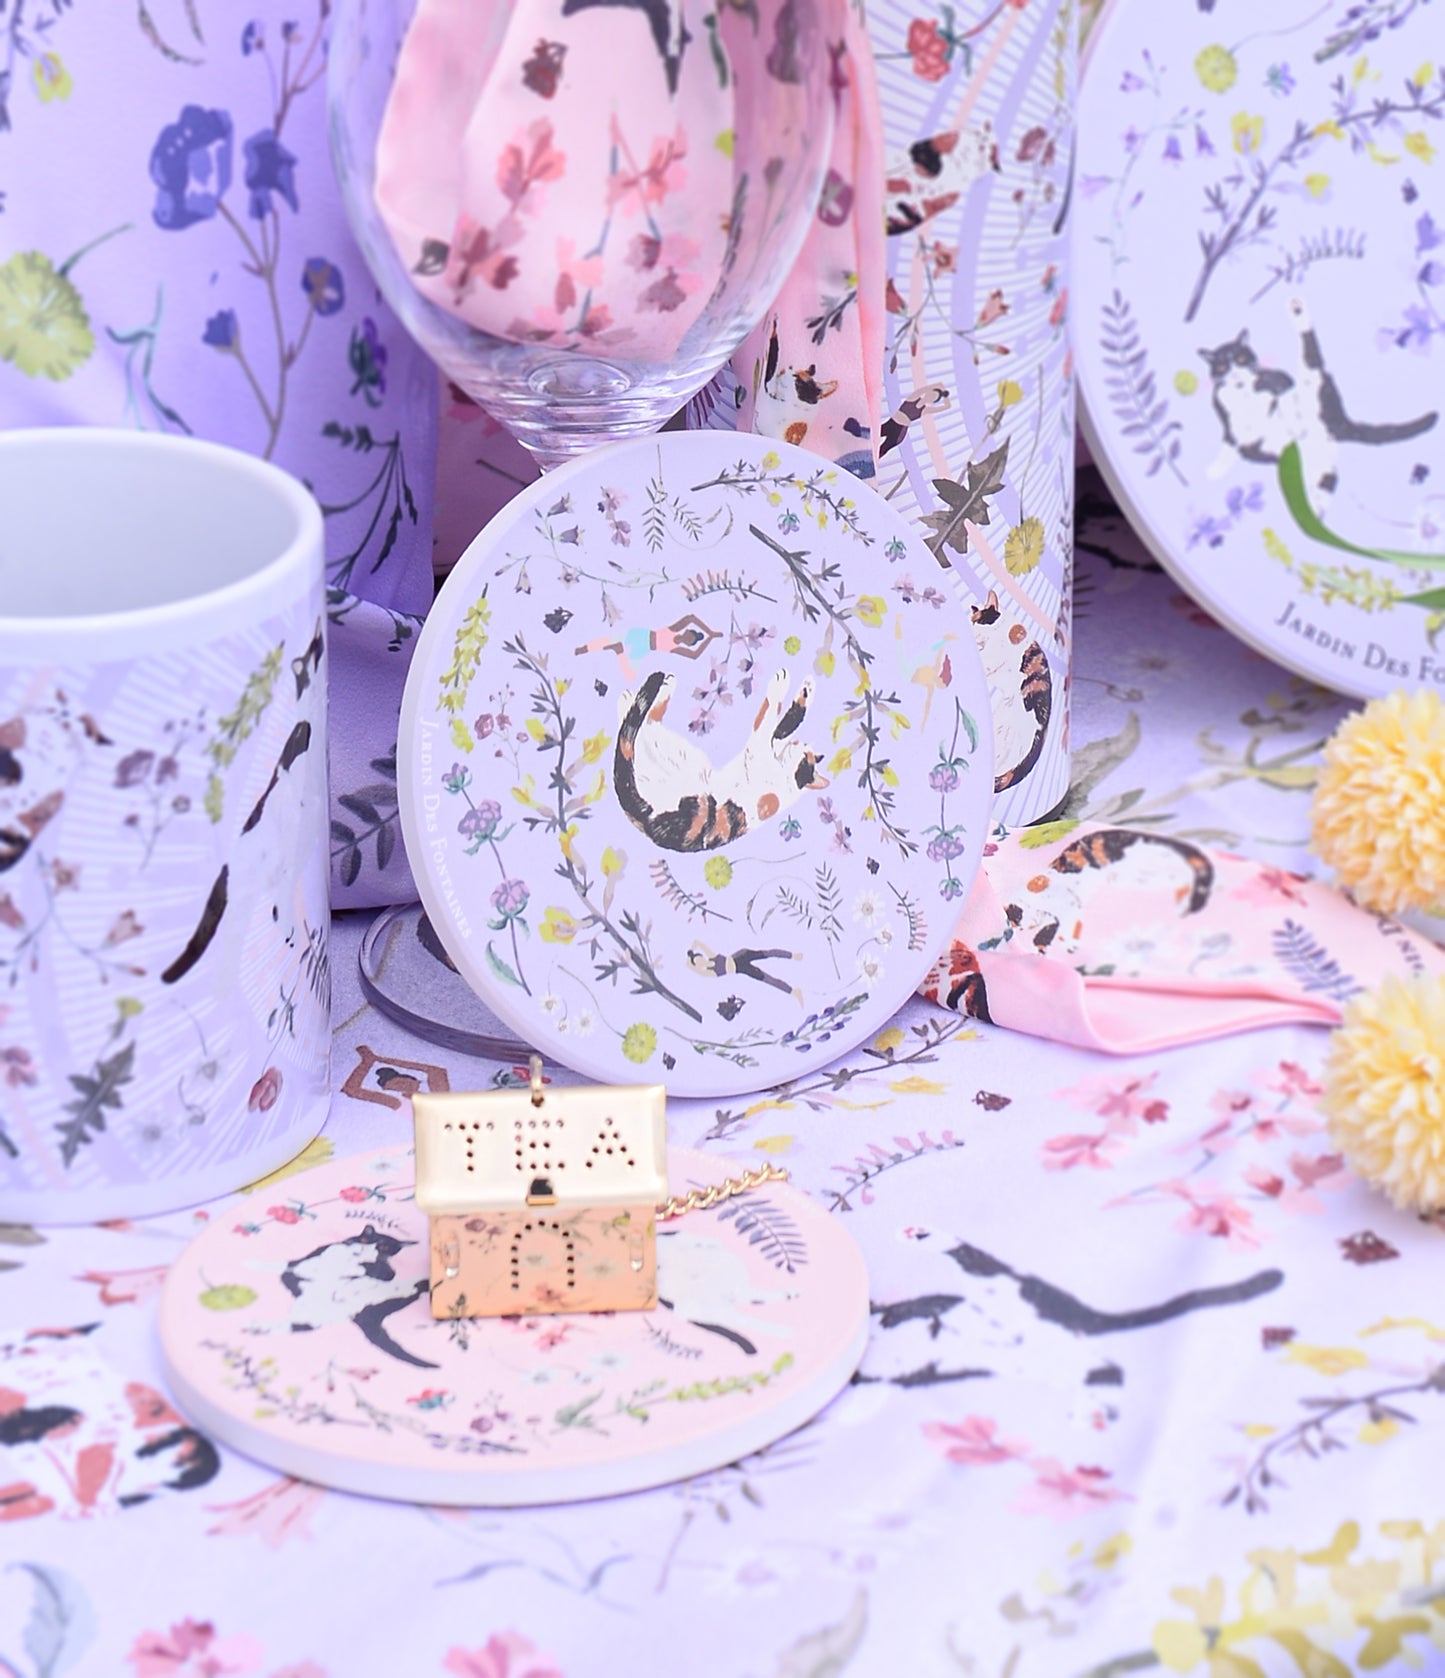 "Yogis Cat and Flower" Ceramic Coaster